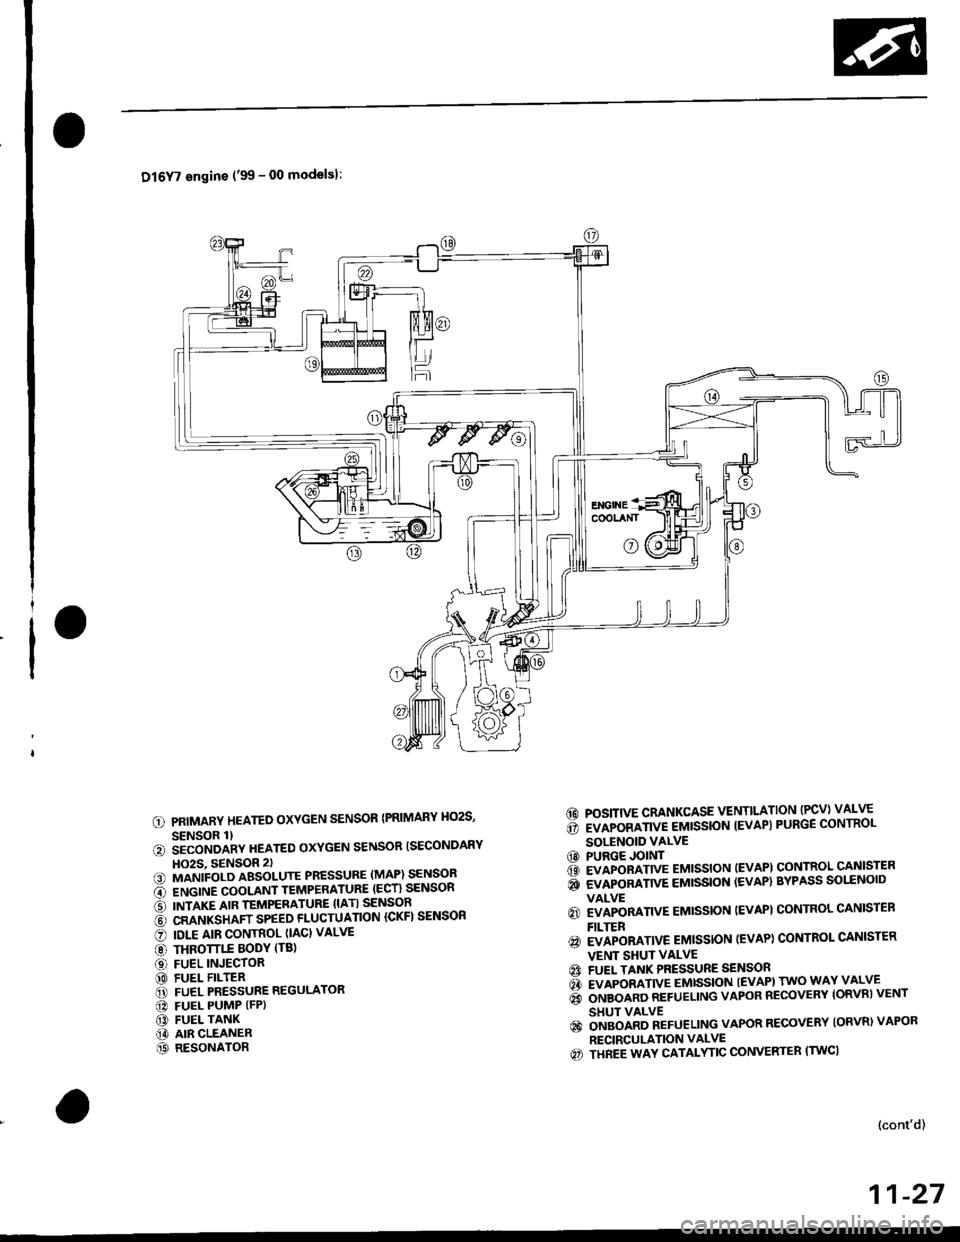 HONDA CIVIC 1997 6.G Owners Guide Dl6Y7 engins (99 - 00 modelsl:
PRIMARY HEATED OXYGEN SENSOR {PRIMARY HO2S,
SENSOR 1)iiconoanv neareo oxYGEN sENsoR ISECoNDARY
HO2S, 9ENSOR 2)MANIFOLD ABSOLUTE PRESSURE (MAP) SENSOR
ENGINE COOLANT TEM